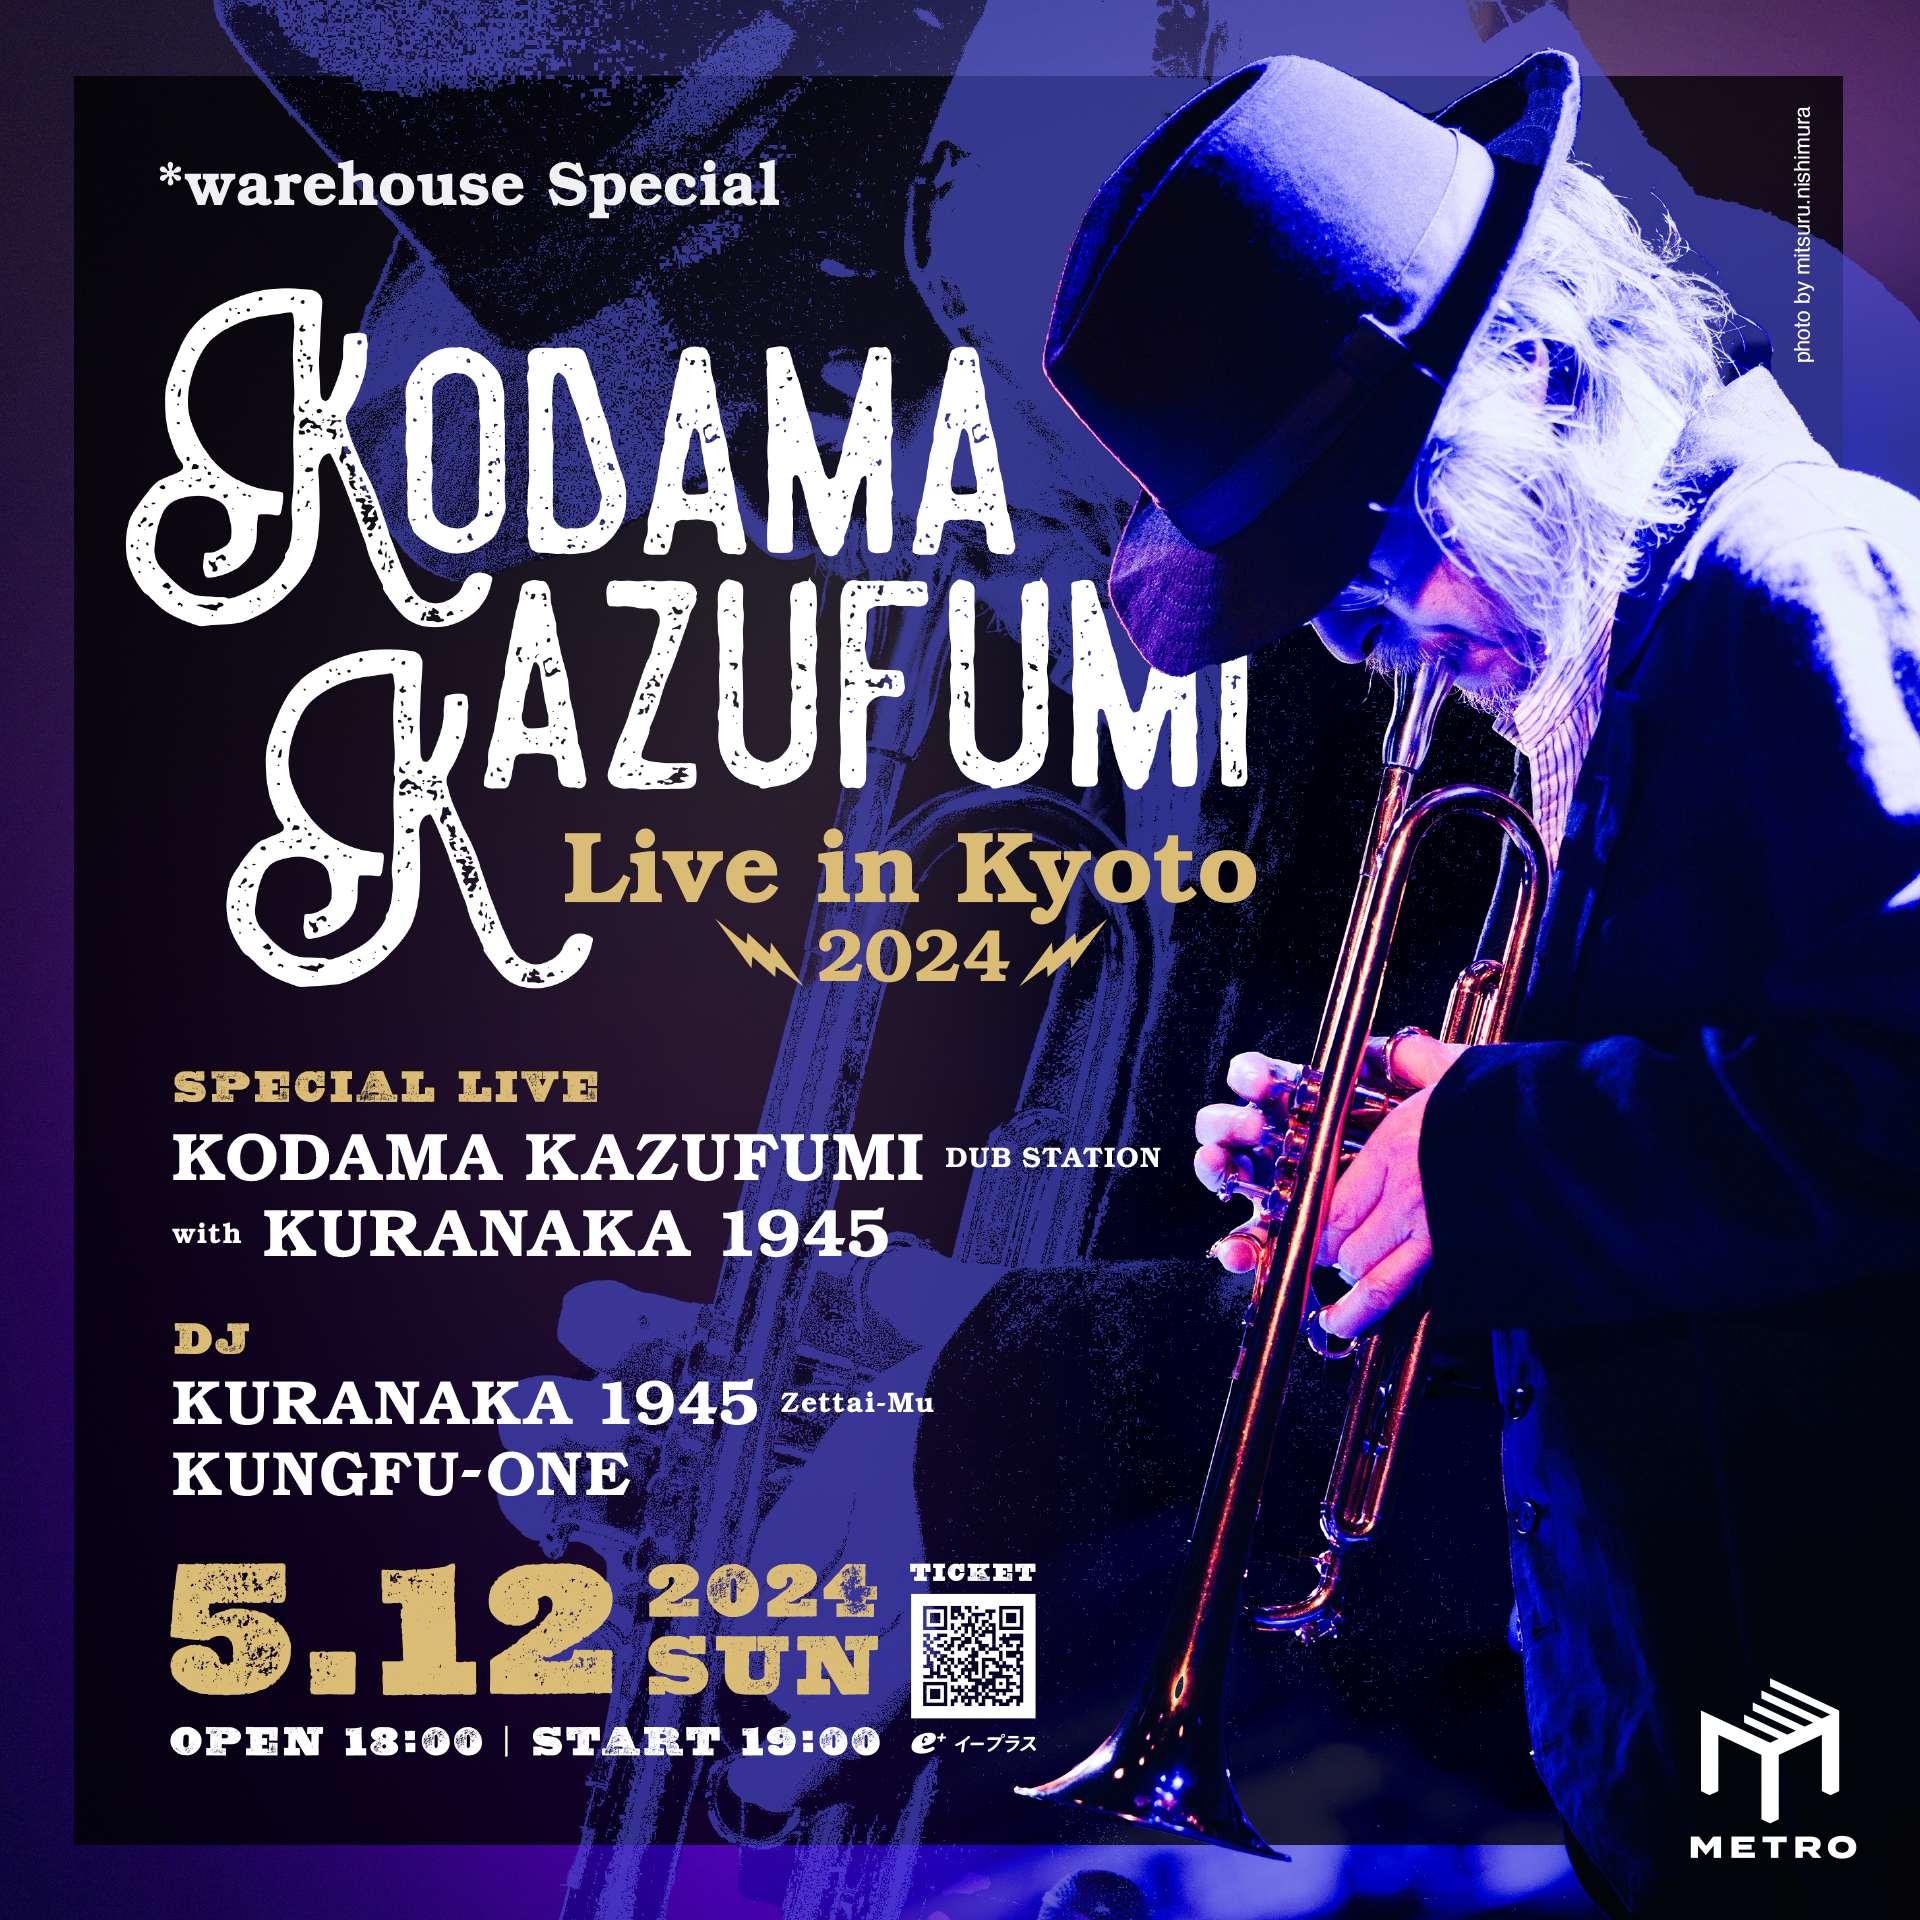 WAREHOUSE Special KODAMA KAZUFUMI Live in Kyoto 2024 | CLUB METRO 